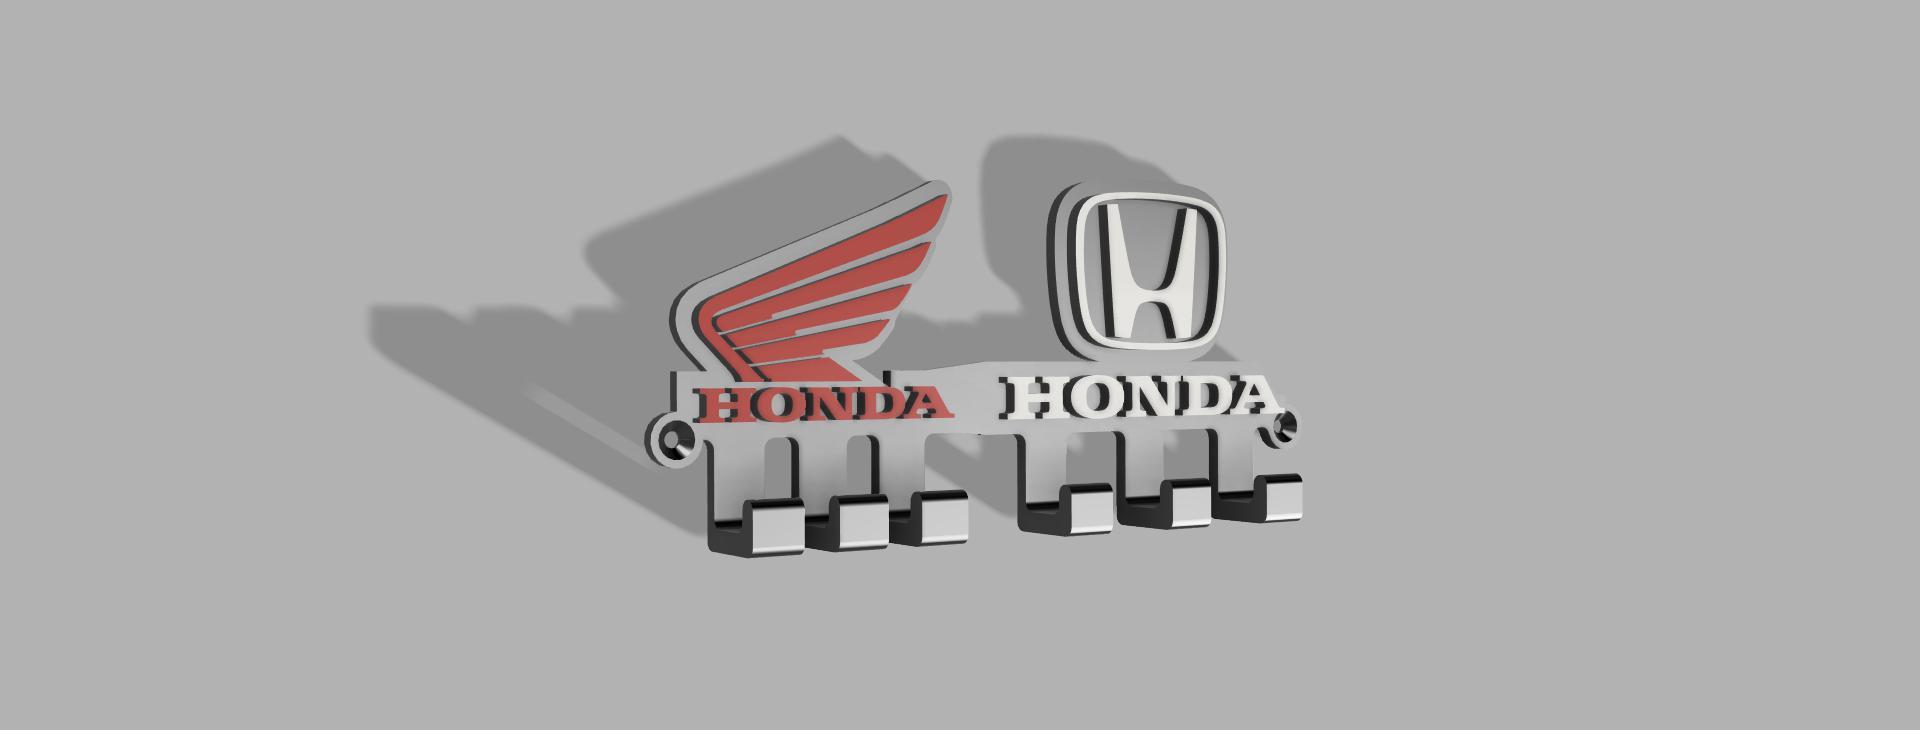 Honda car and motorcycle key hanger  3d model